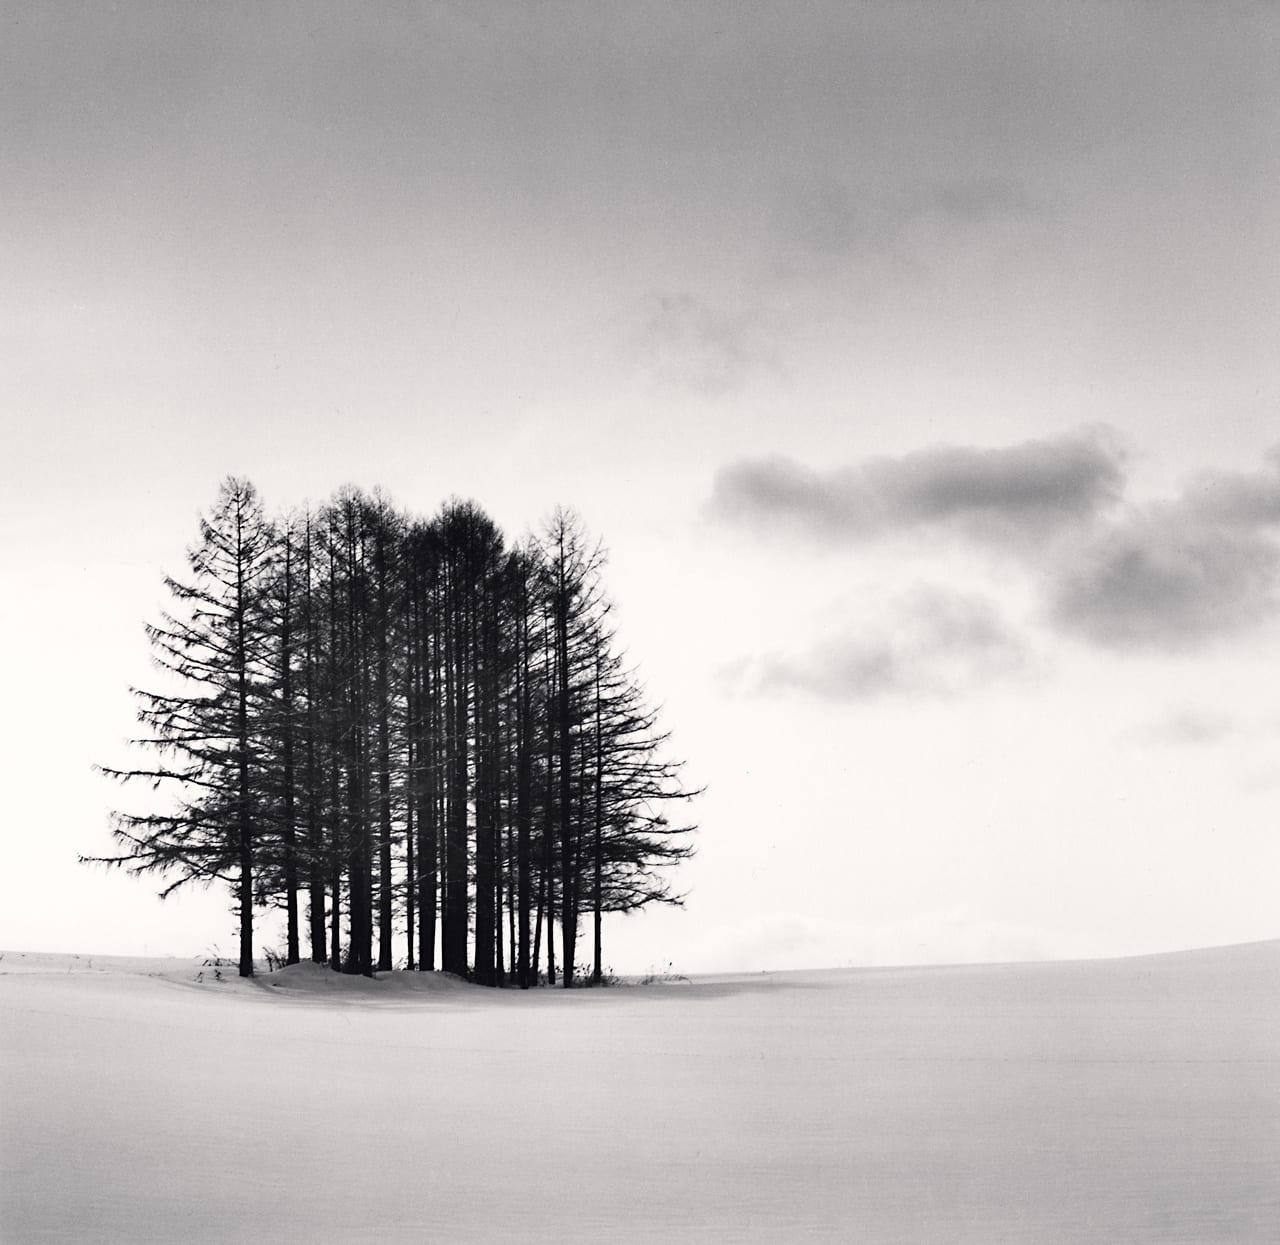 Michael Kenna, Cold Landscape, Study 2, Sanai, Hokkaido, Japan